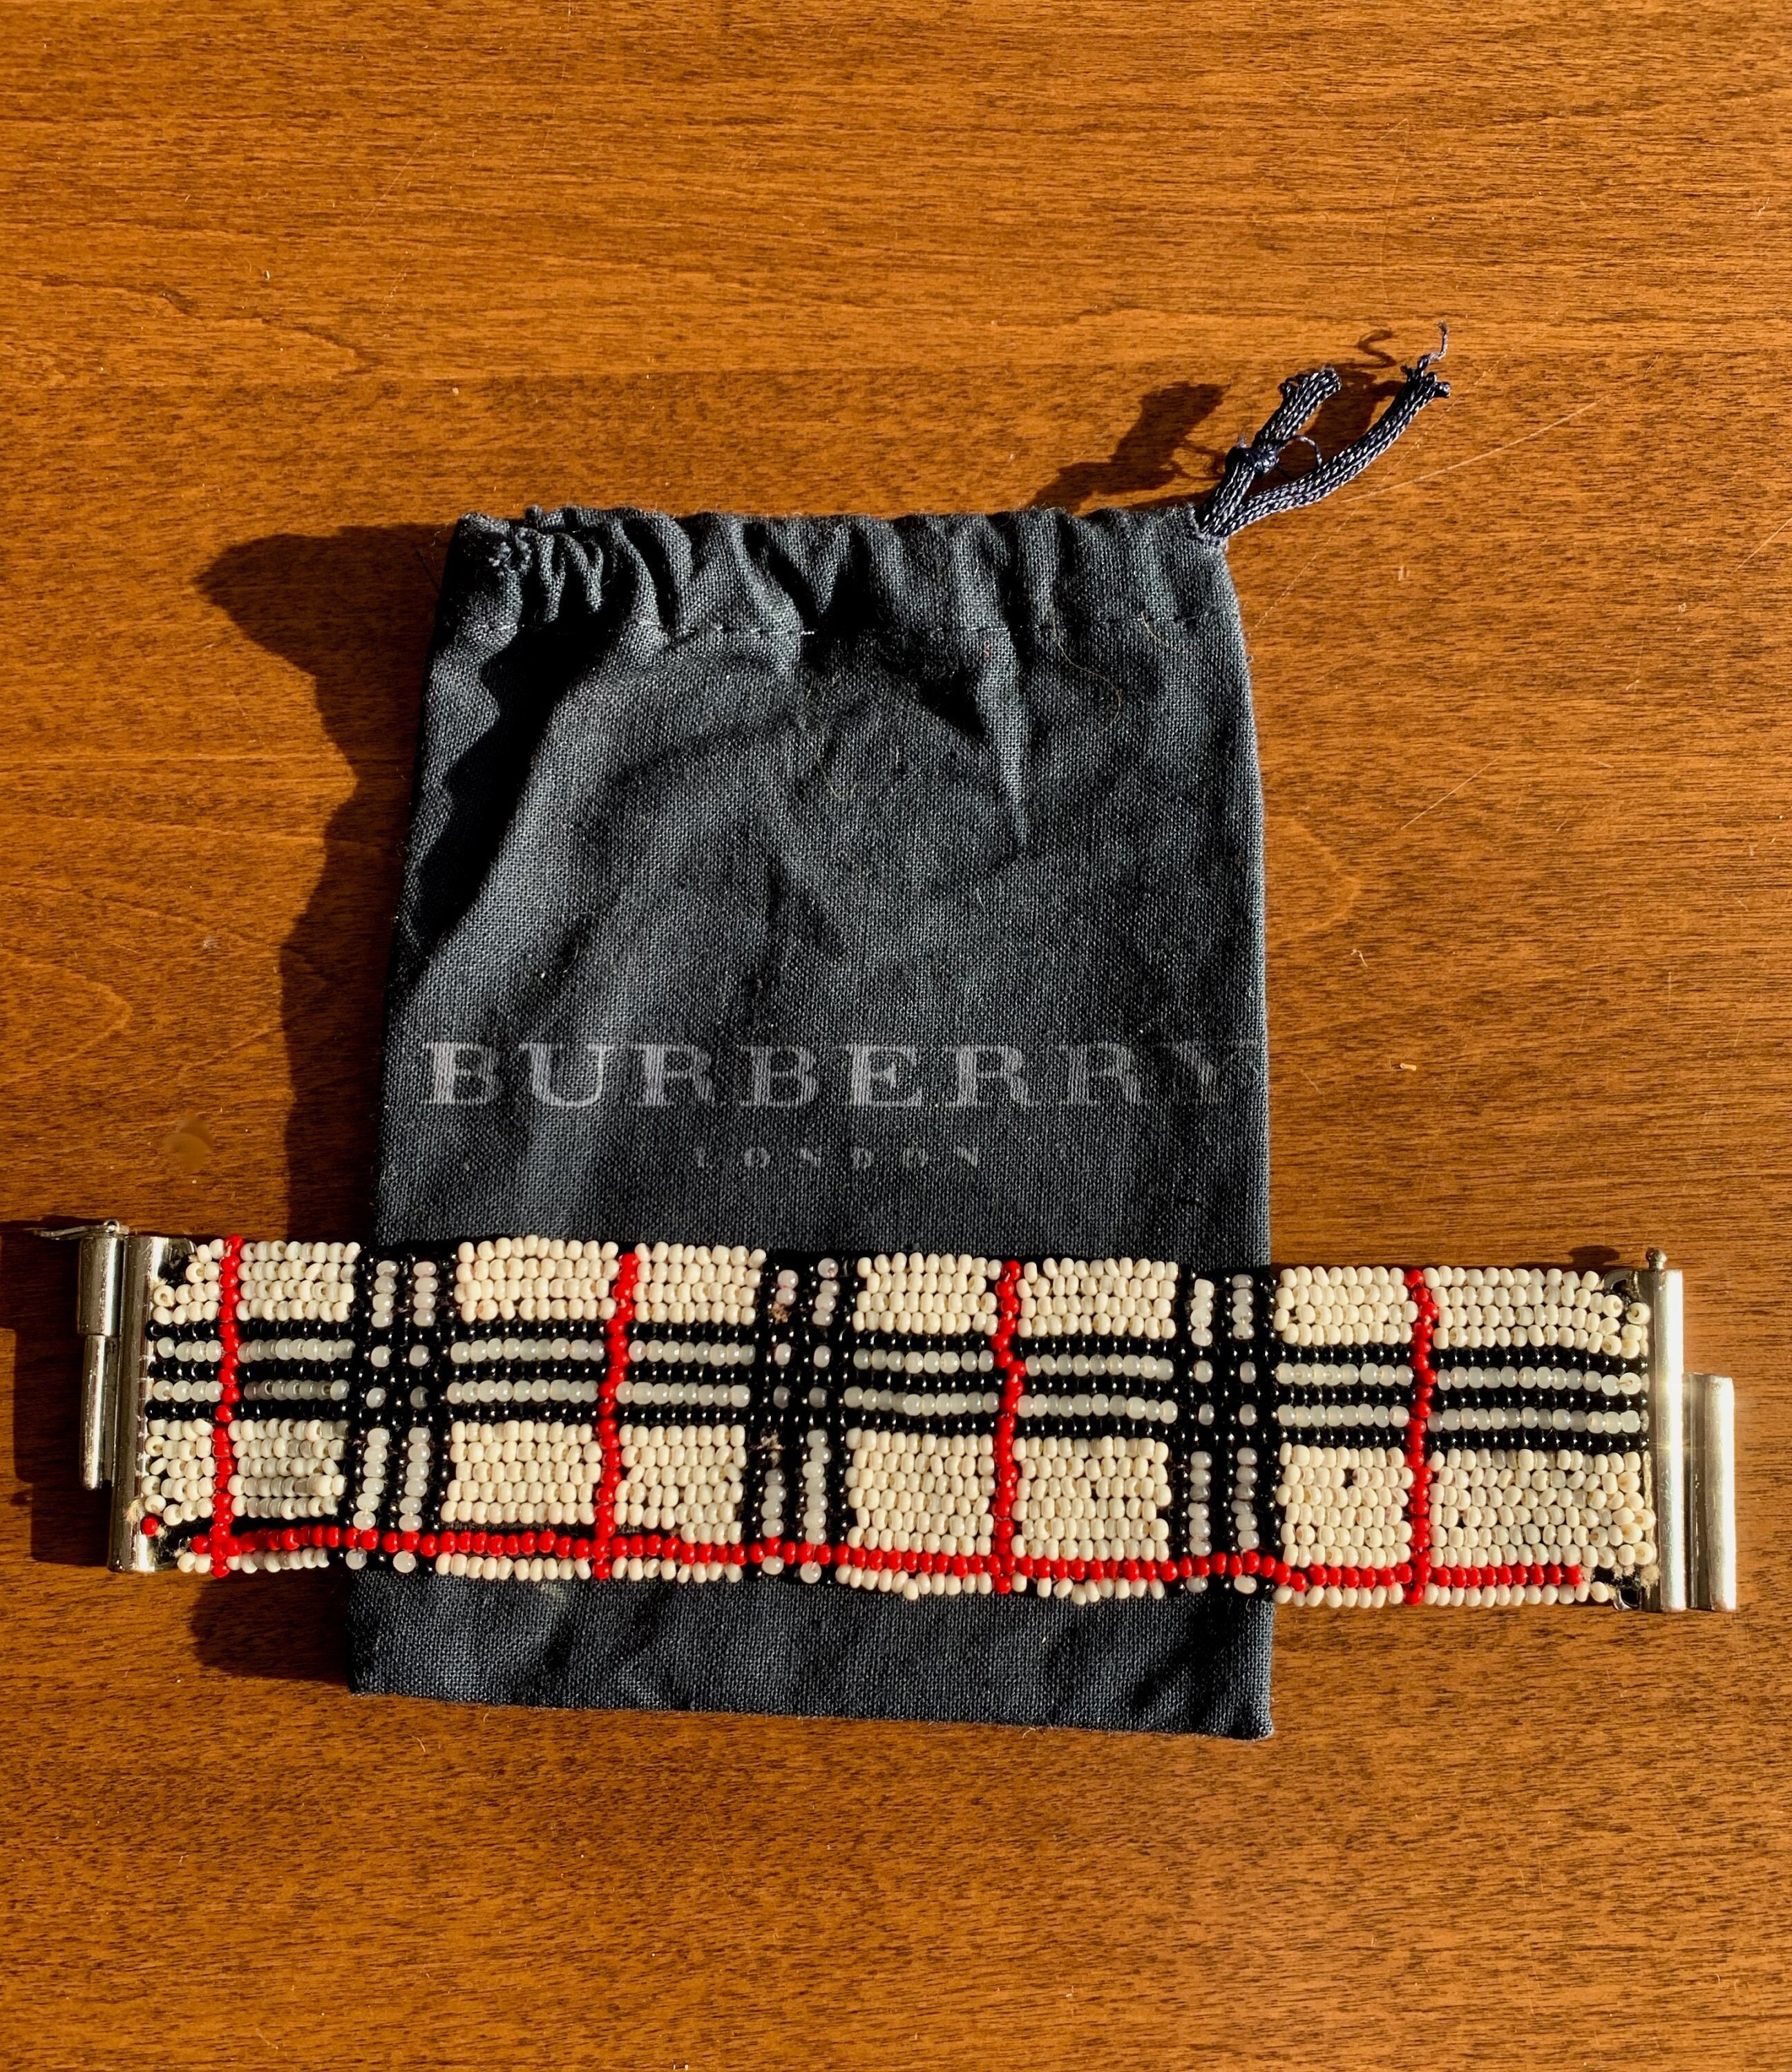 real/fake burberry belt